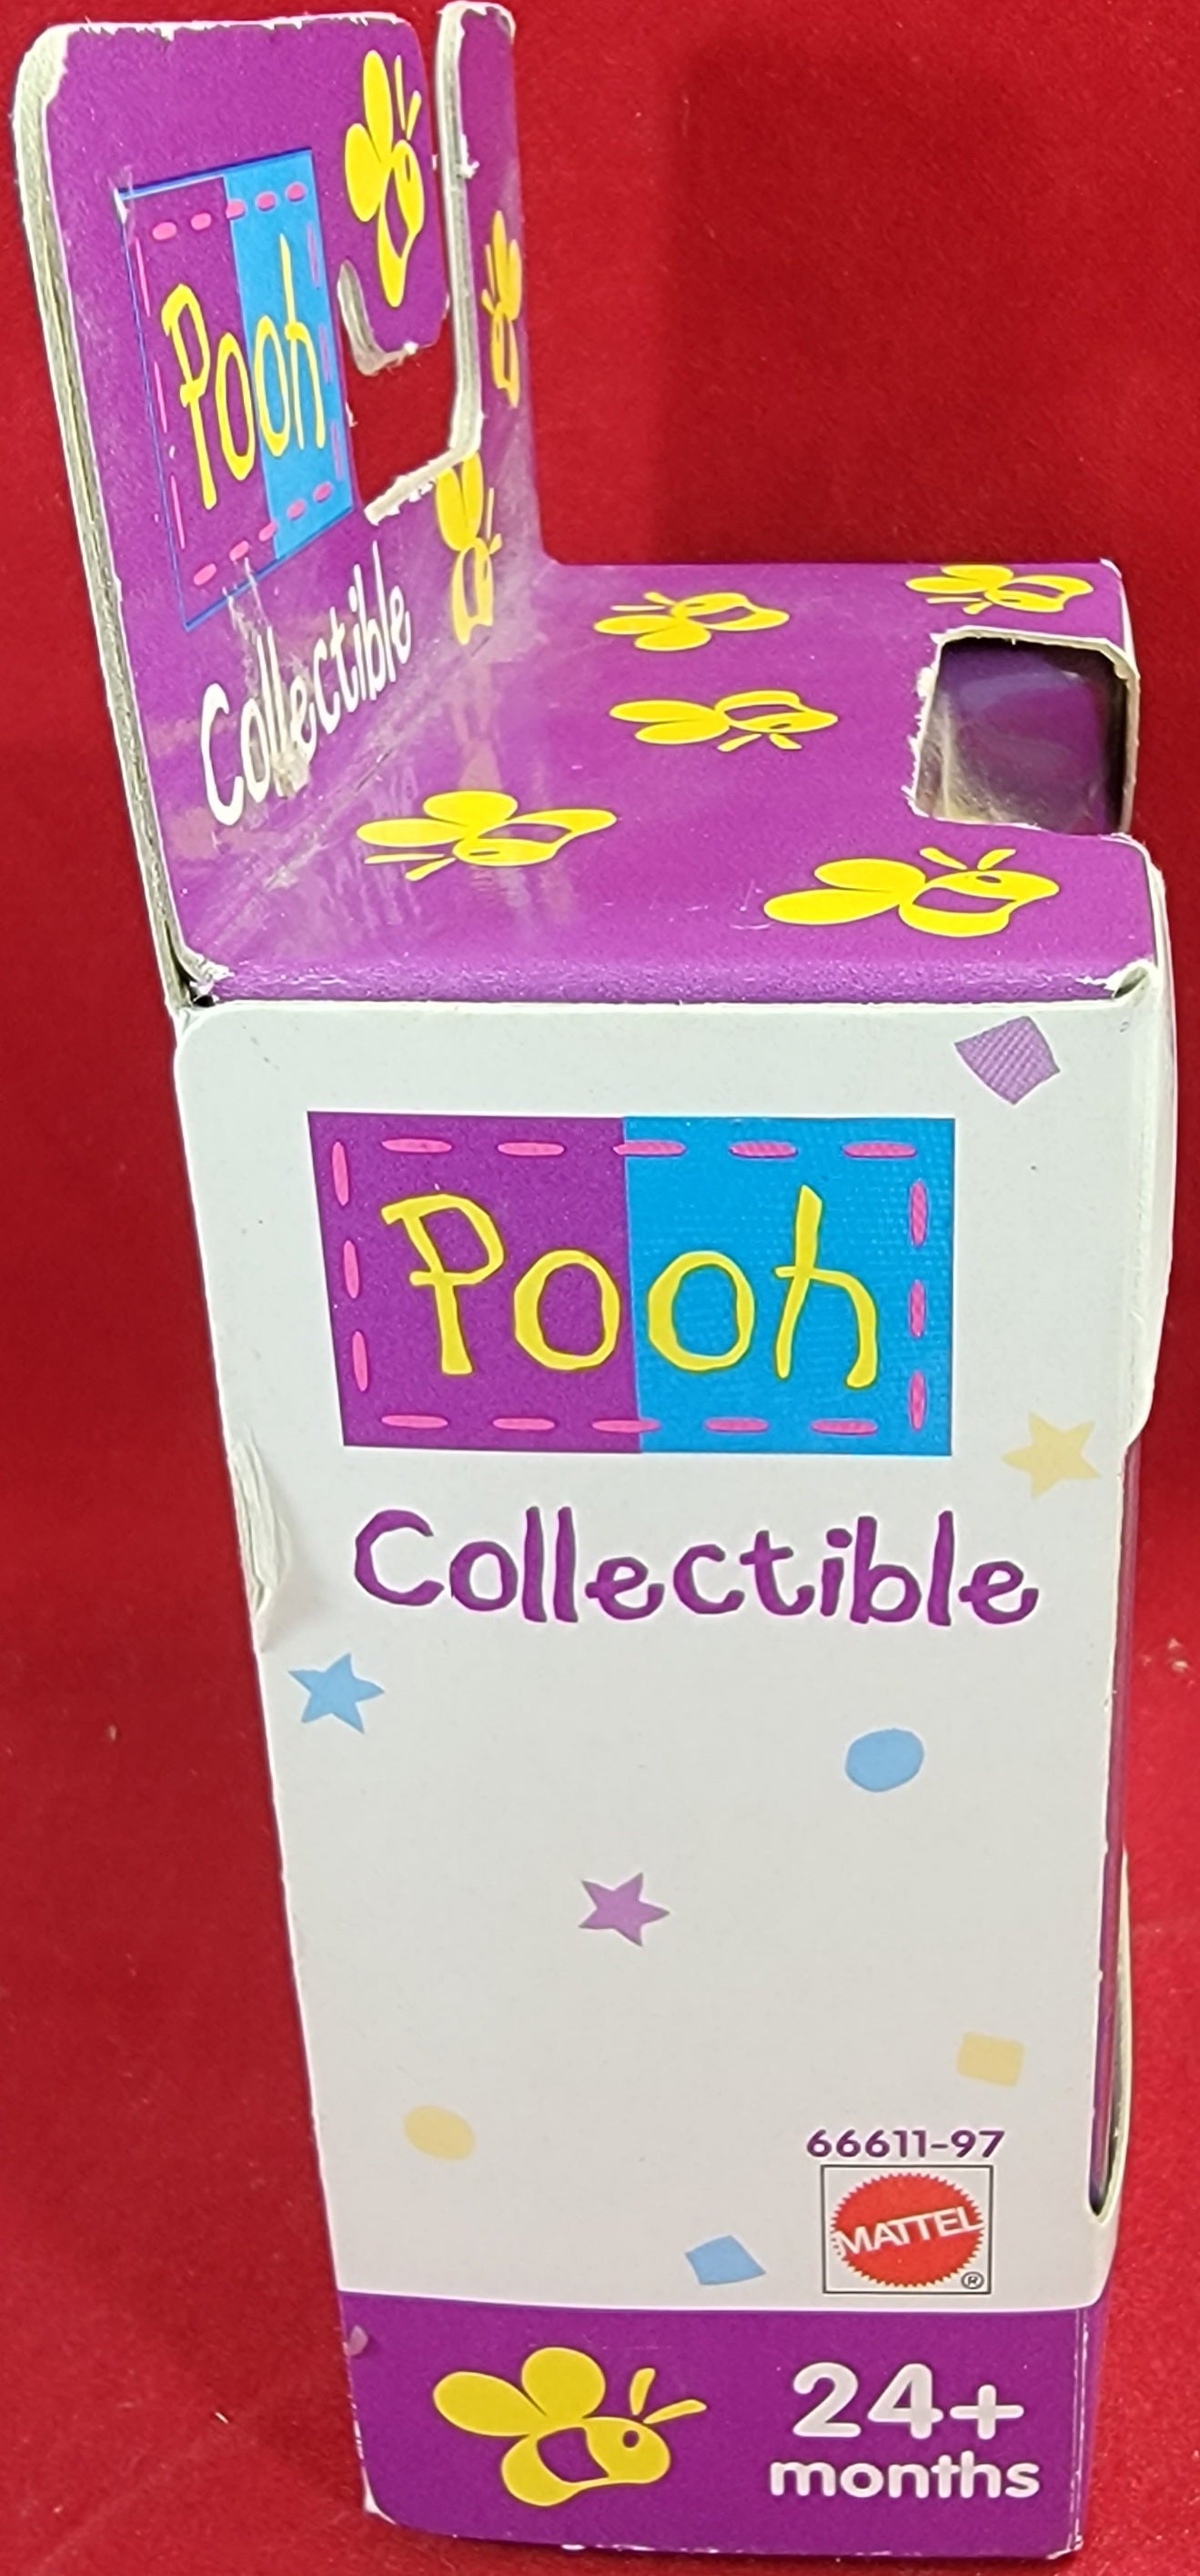 Pooh collectible piget figure (nib)